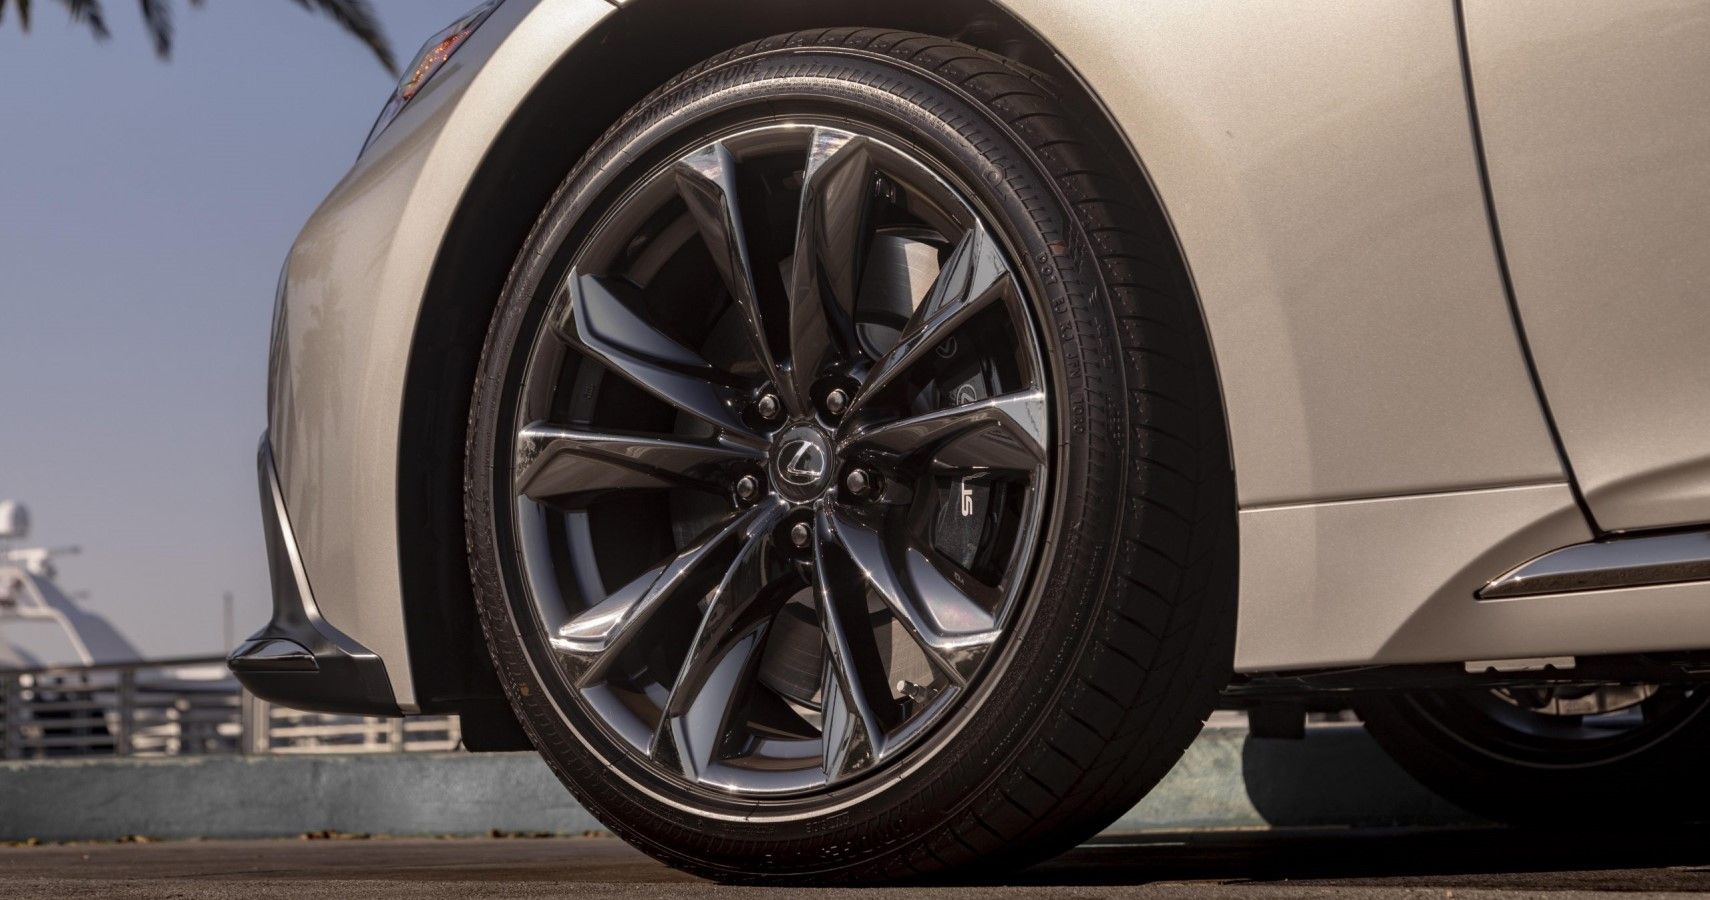 2022 Lexus LS cool 20-inch wheels close-up view